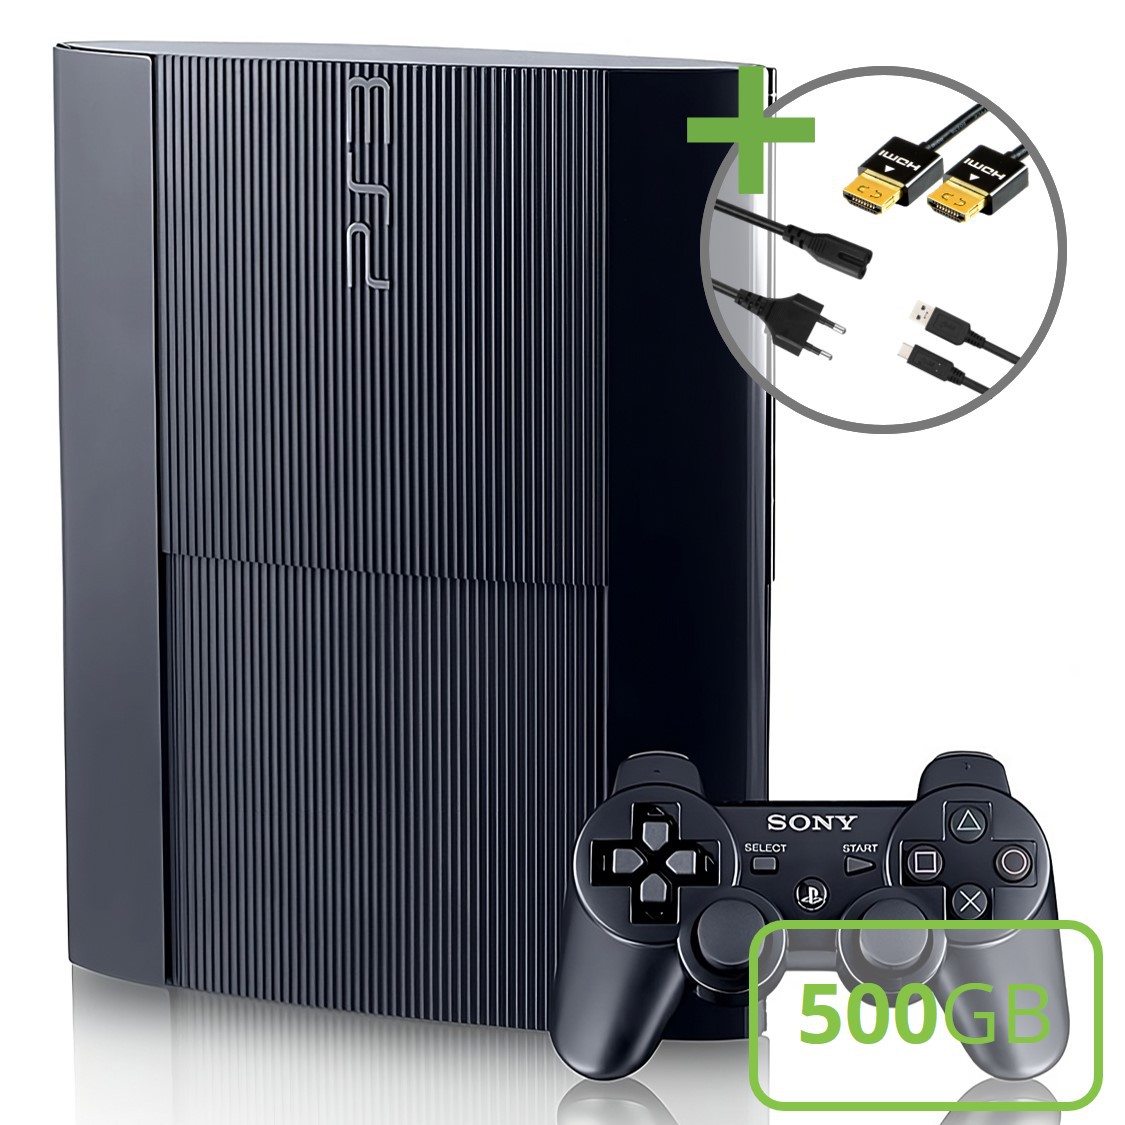 Sony PlayStation 3 Super Slim (500GB) Starter Pack - DualShock Edition - Playstation 3 Hardware - 2